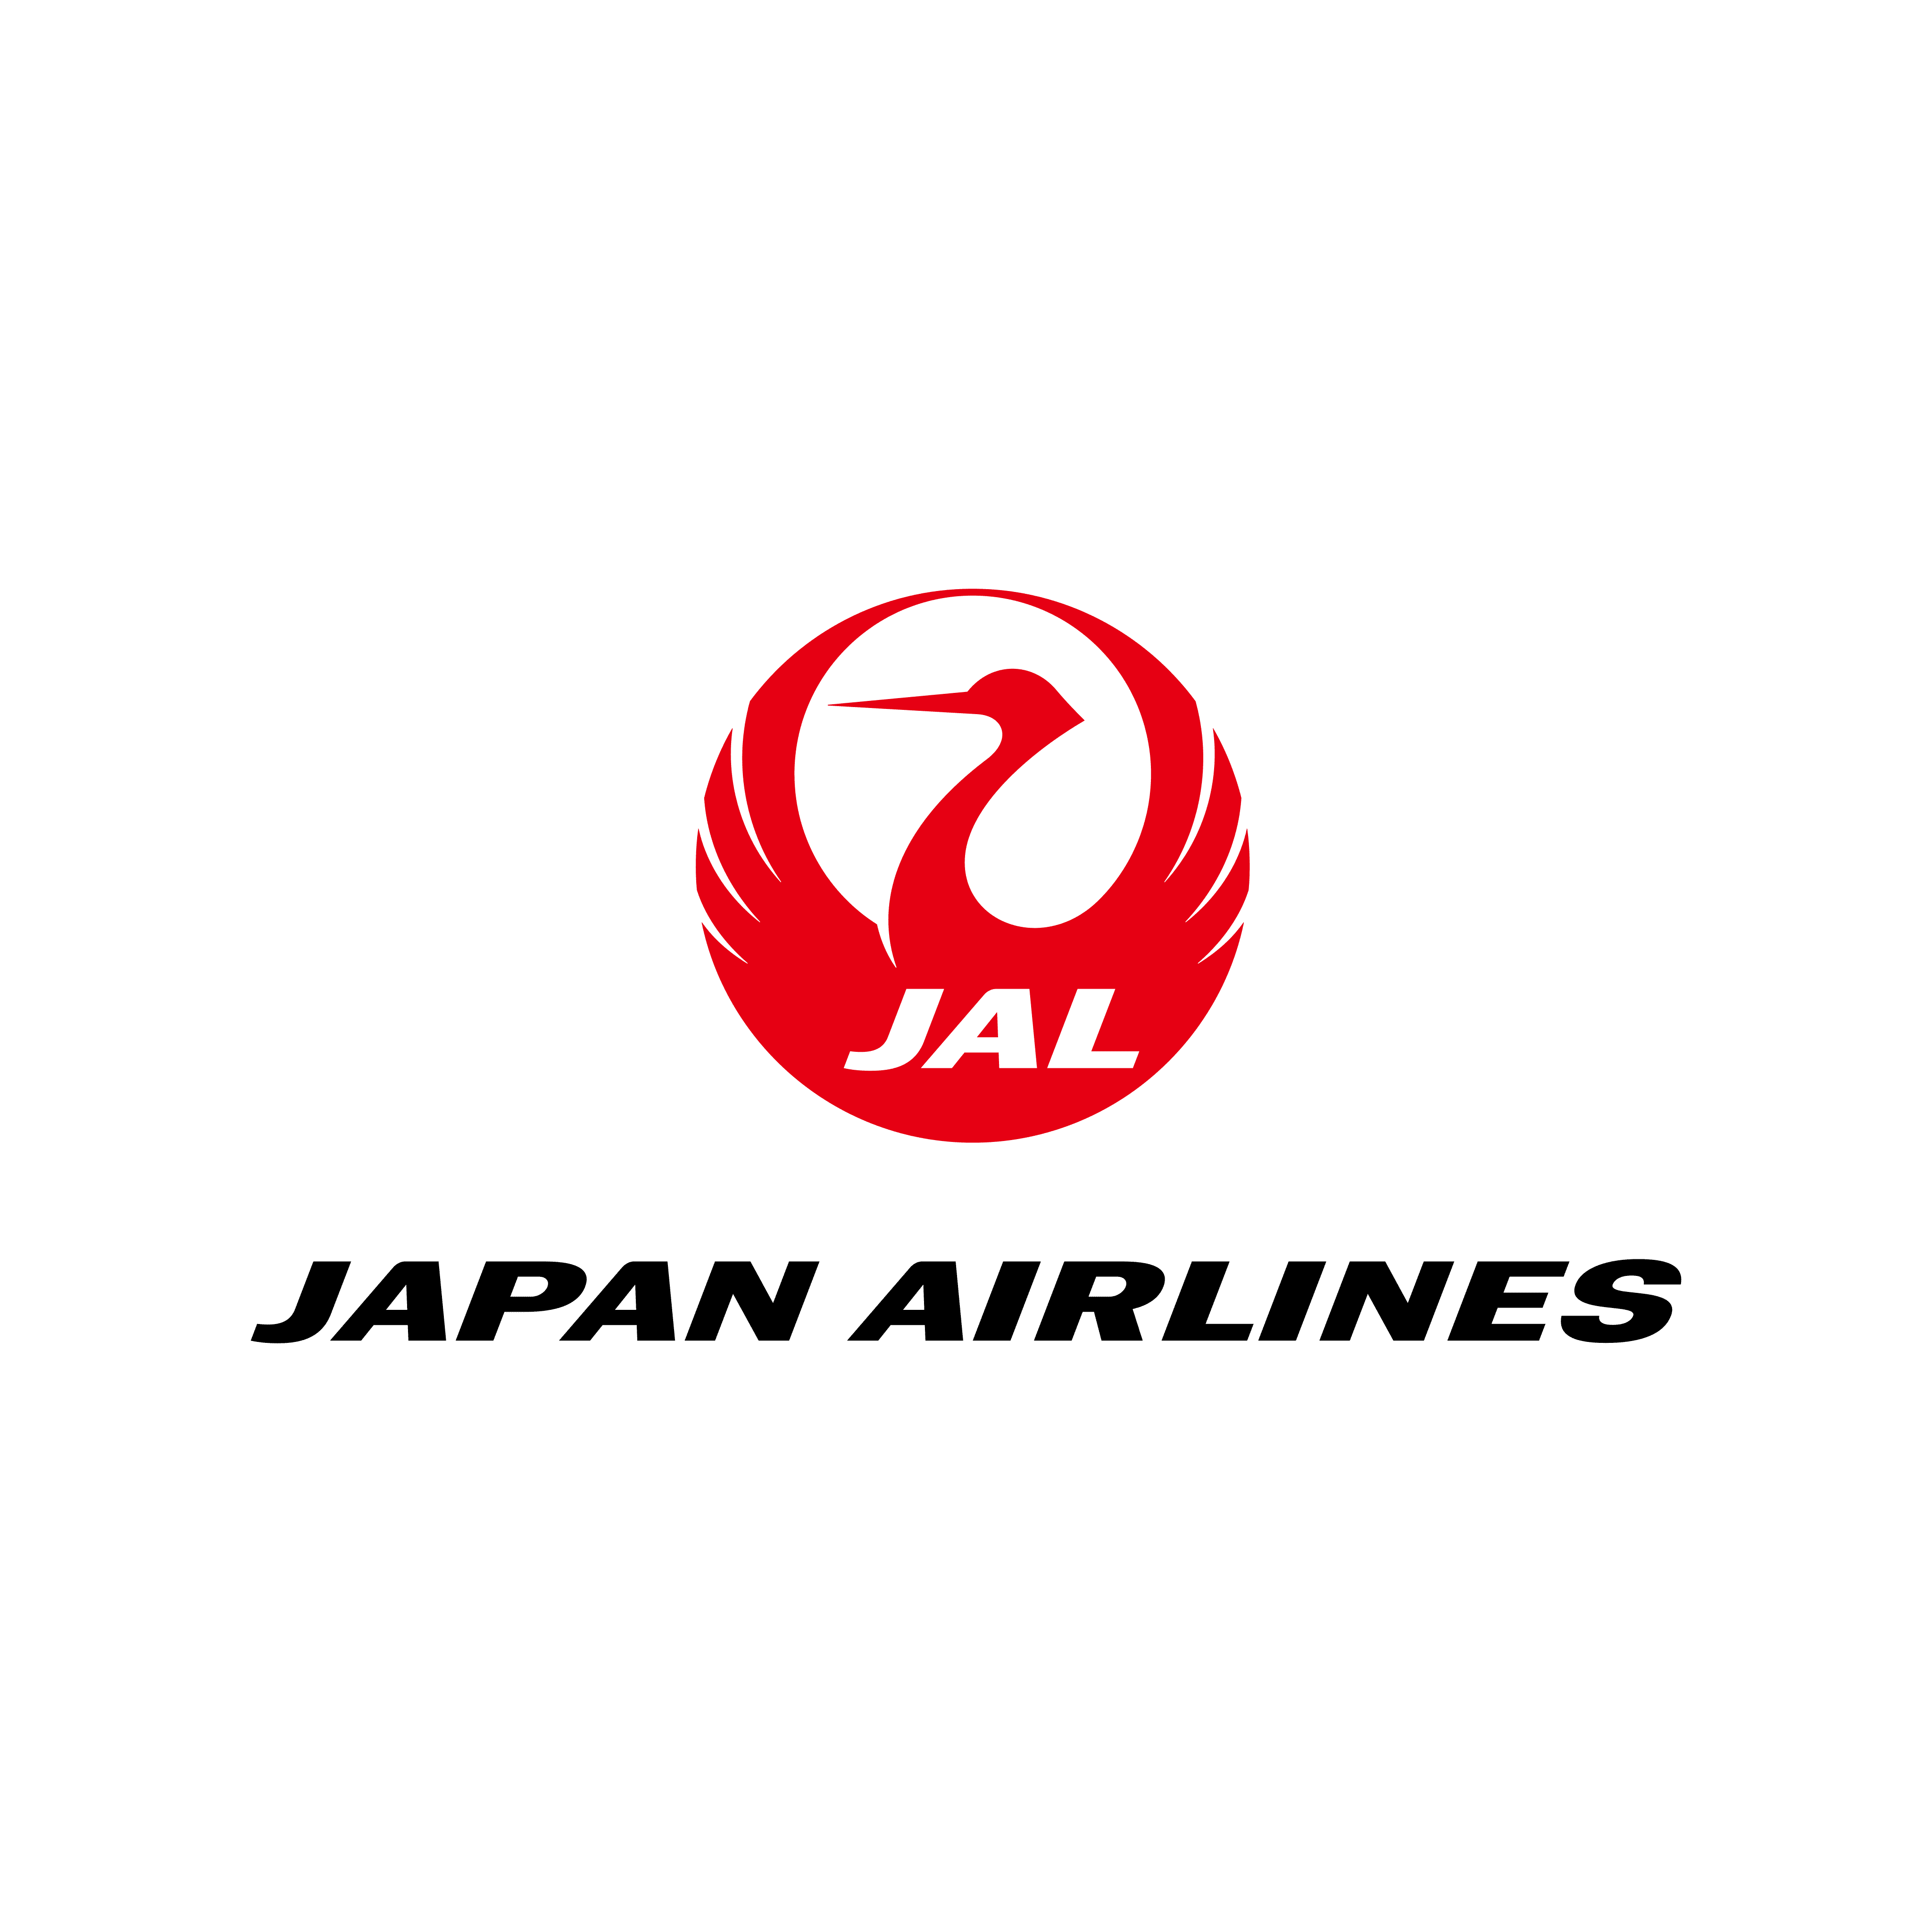 Japan_Airlines_logo